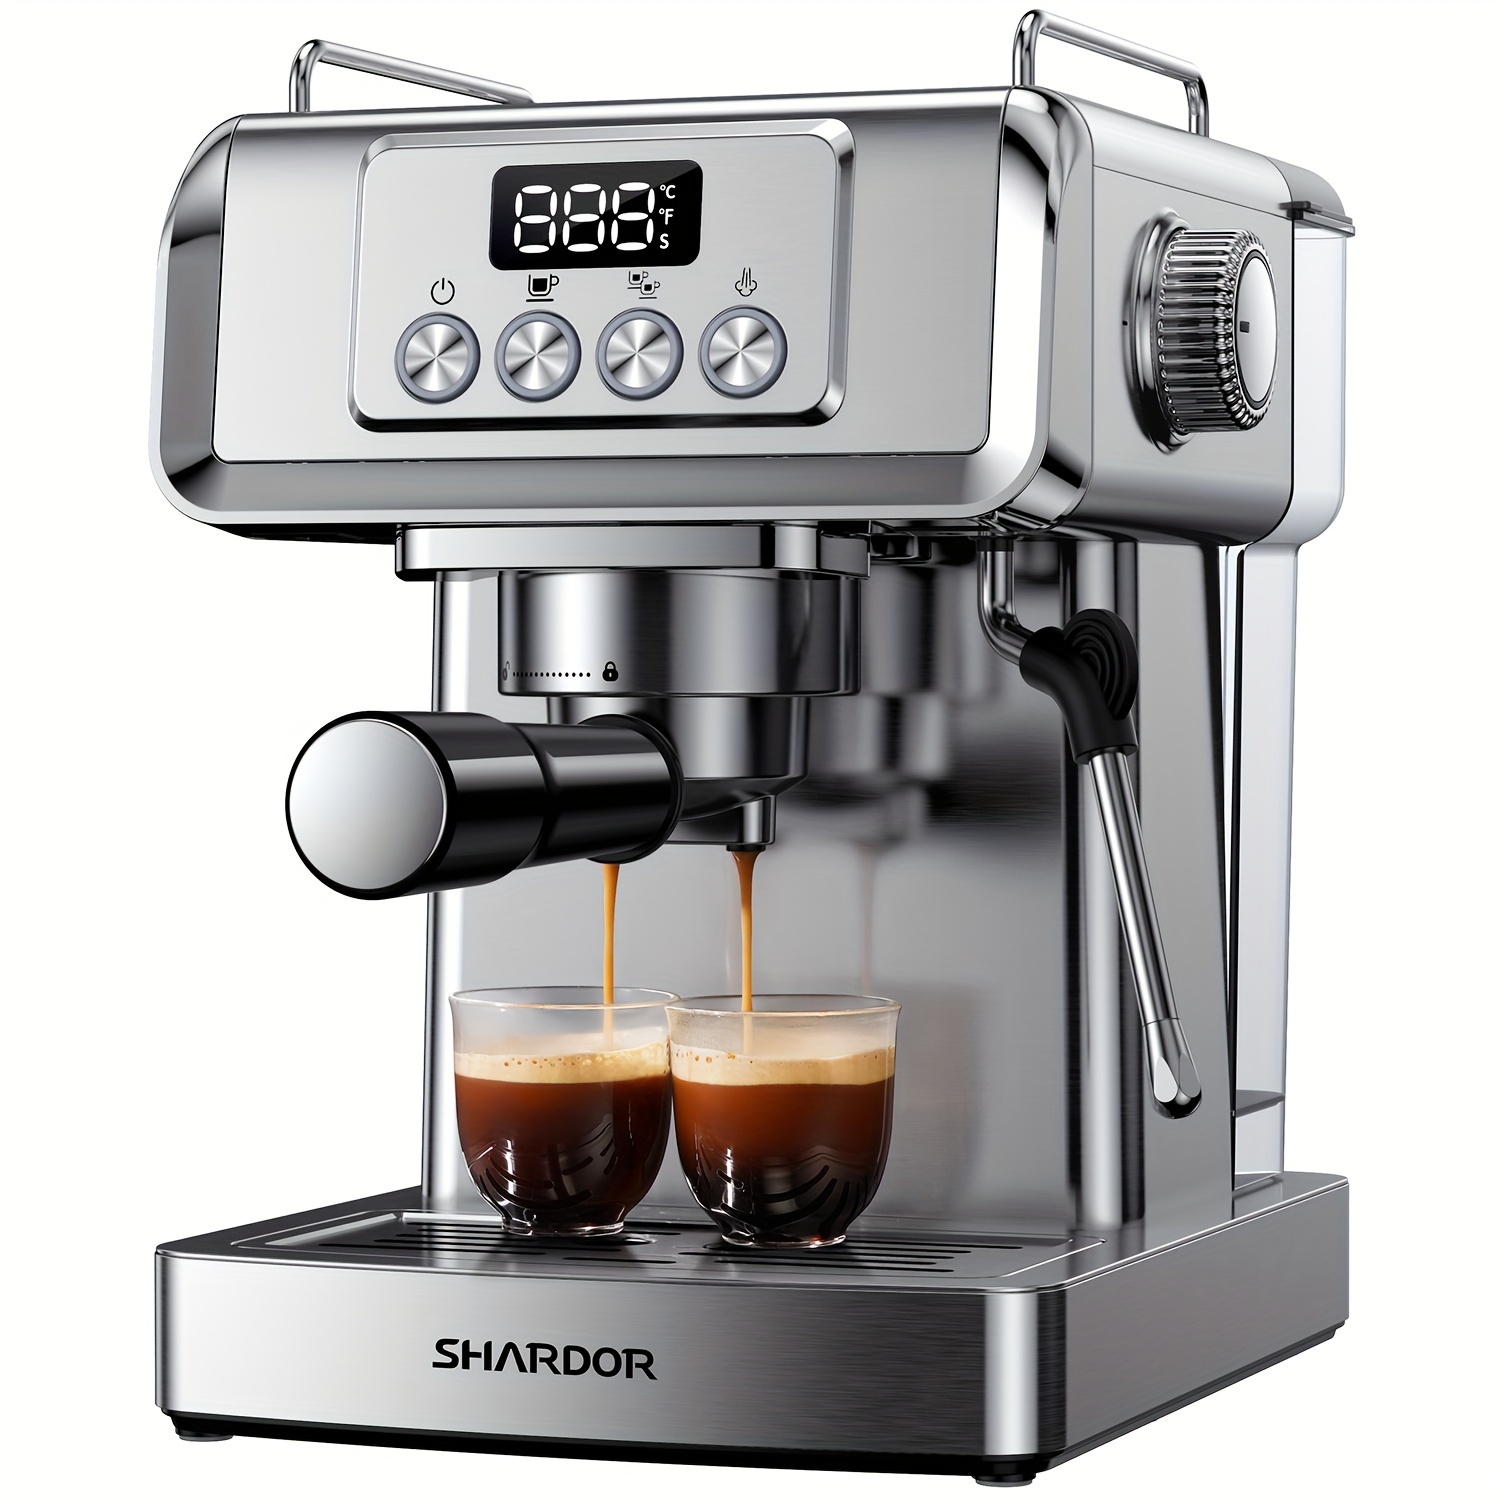 

Espresso Machine, High-grade Stainless Steel, 20 Bar Pump , 9.1x11.1x10.9 Inches, Elegant & User-friendly Design For Rich Creamy Espresso